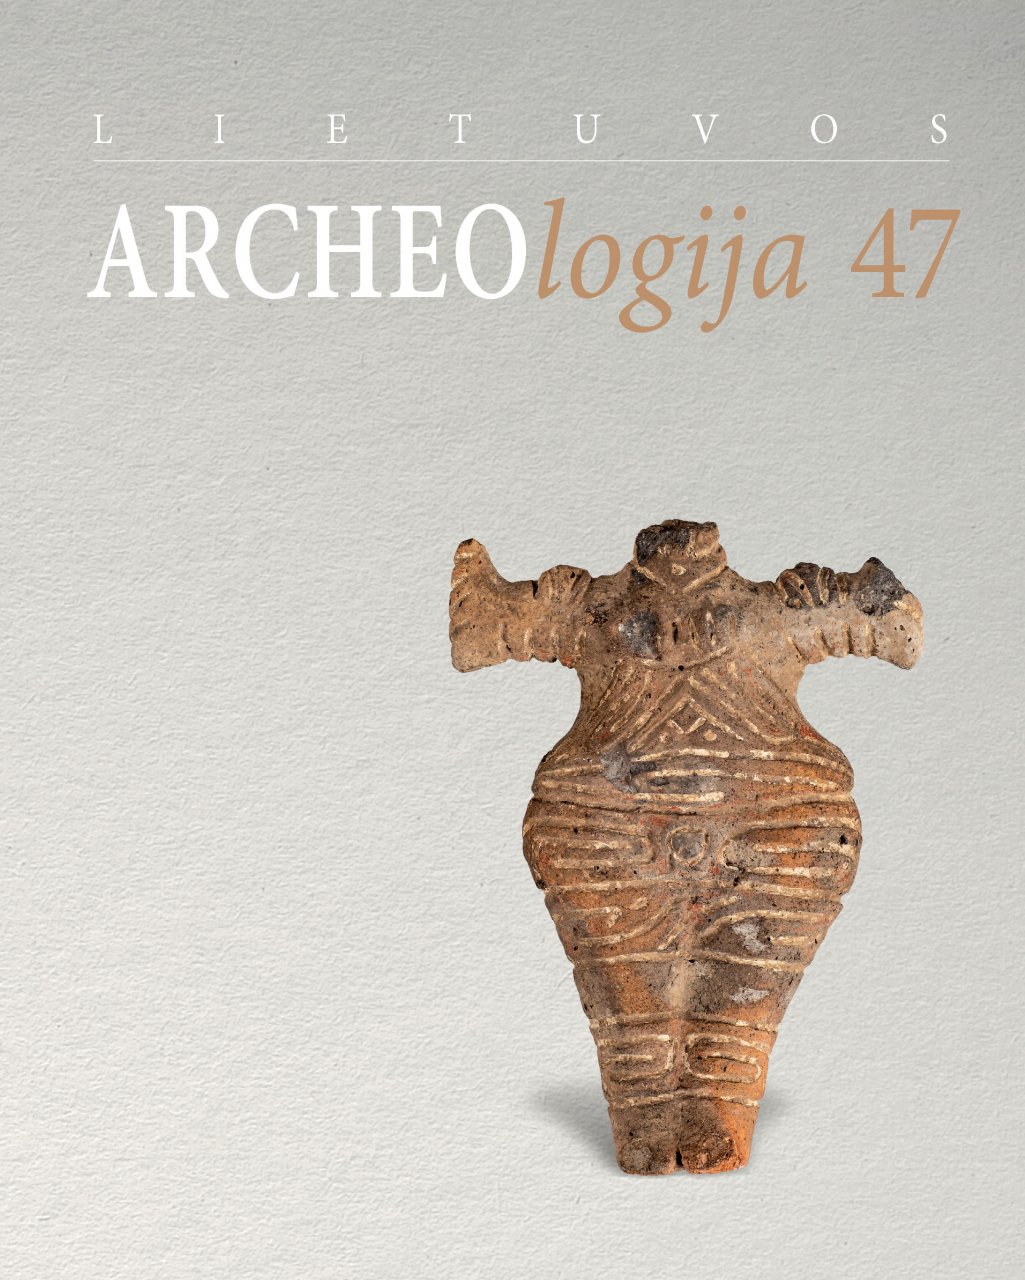 Lietuvos archeologija / Lithuanian Archaeology Cover